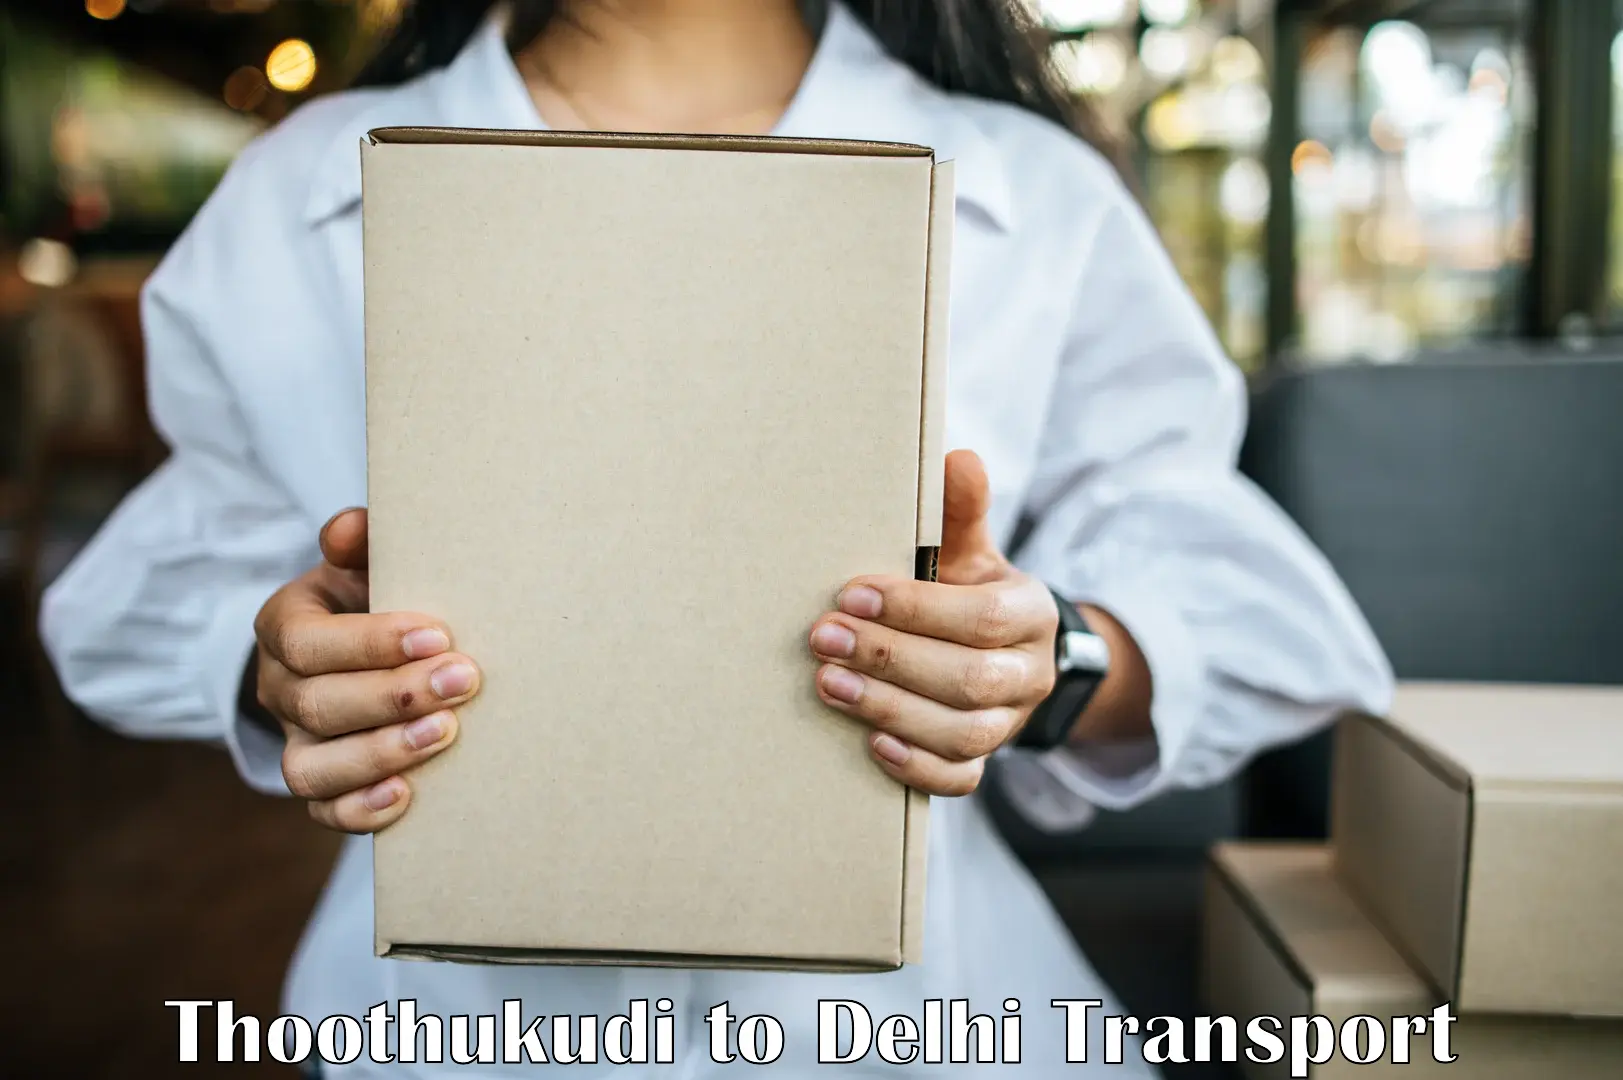 Delivery service Thoothukudi to Delhi